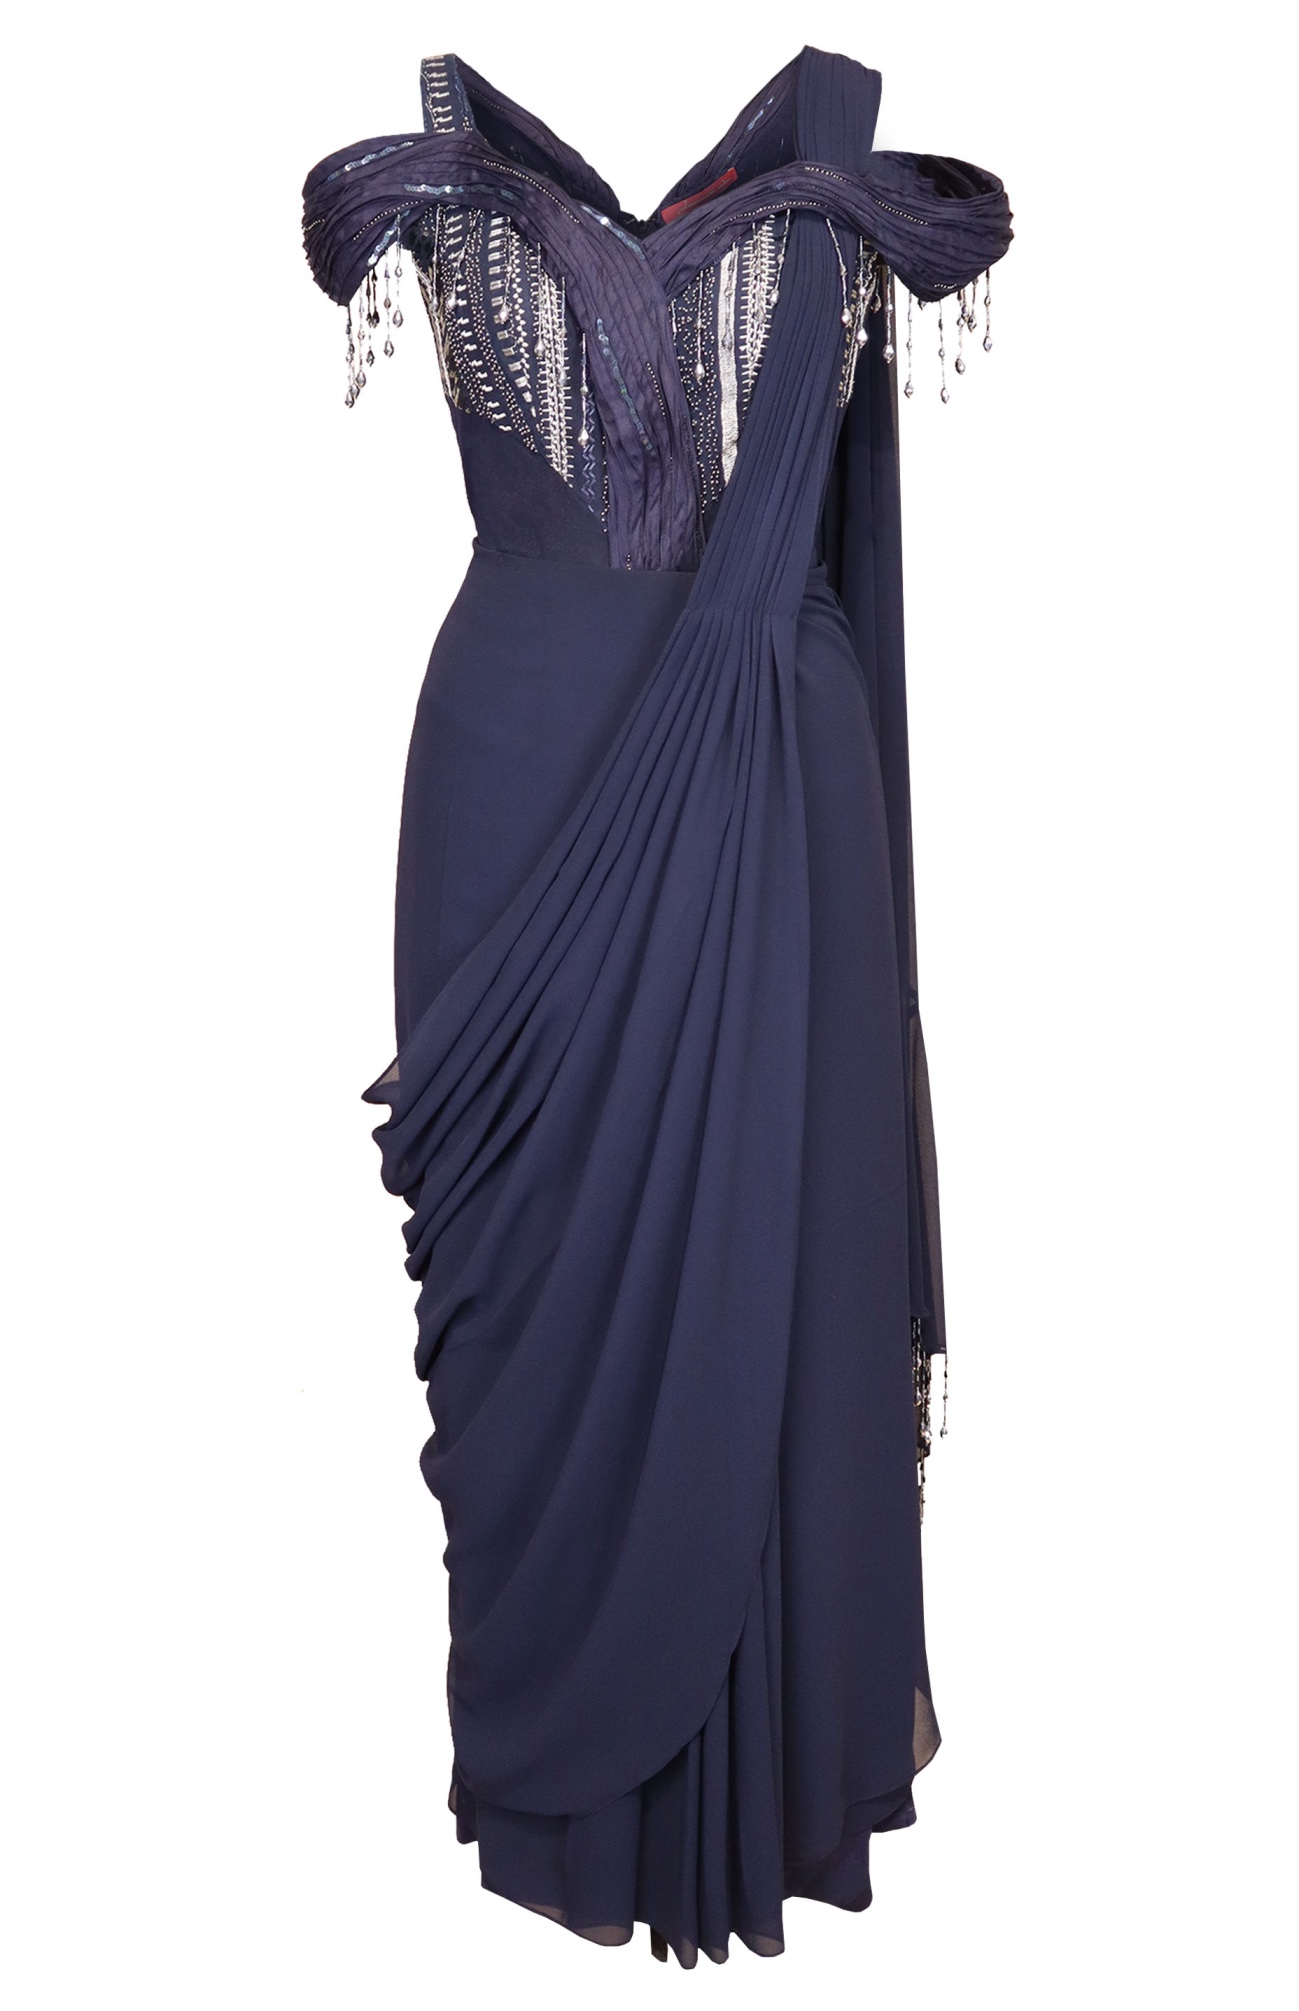 Branded Half Saree Style Gown for Ladies - Karim Dresses